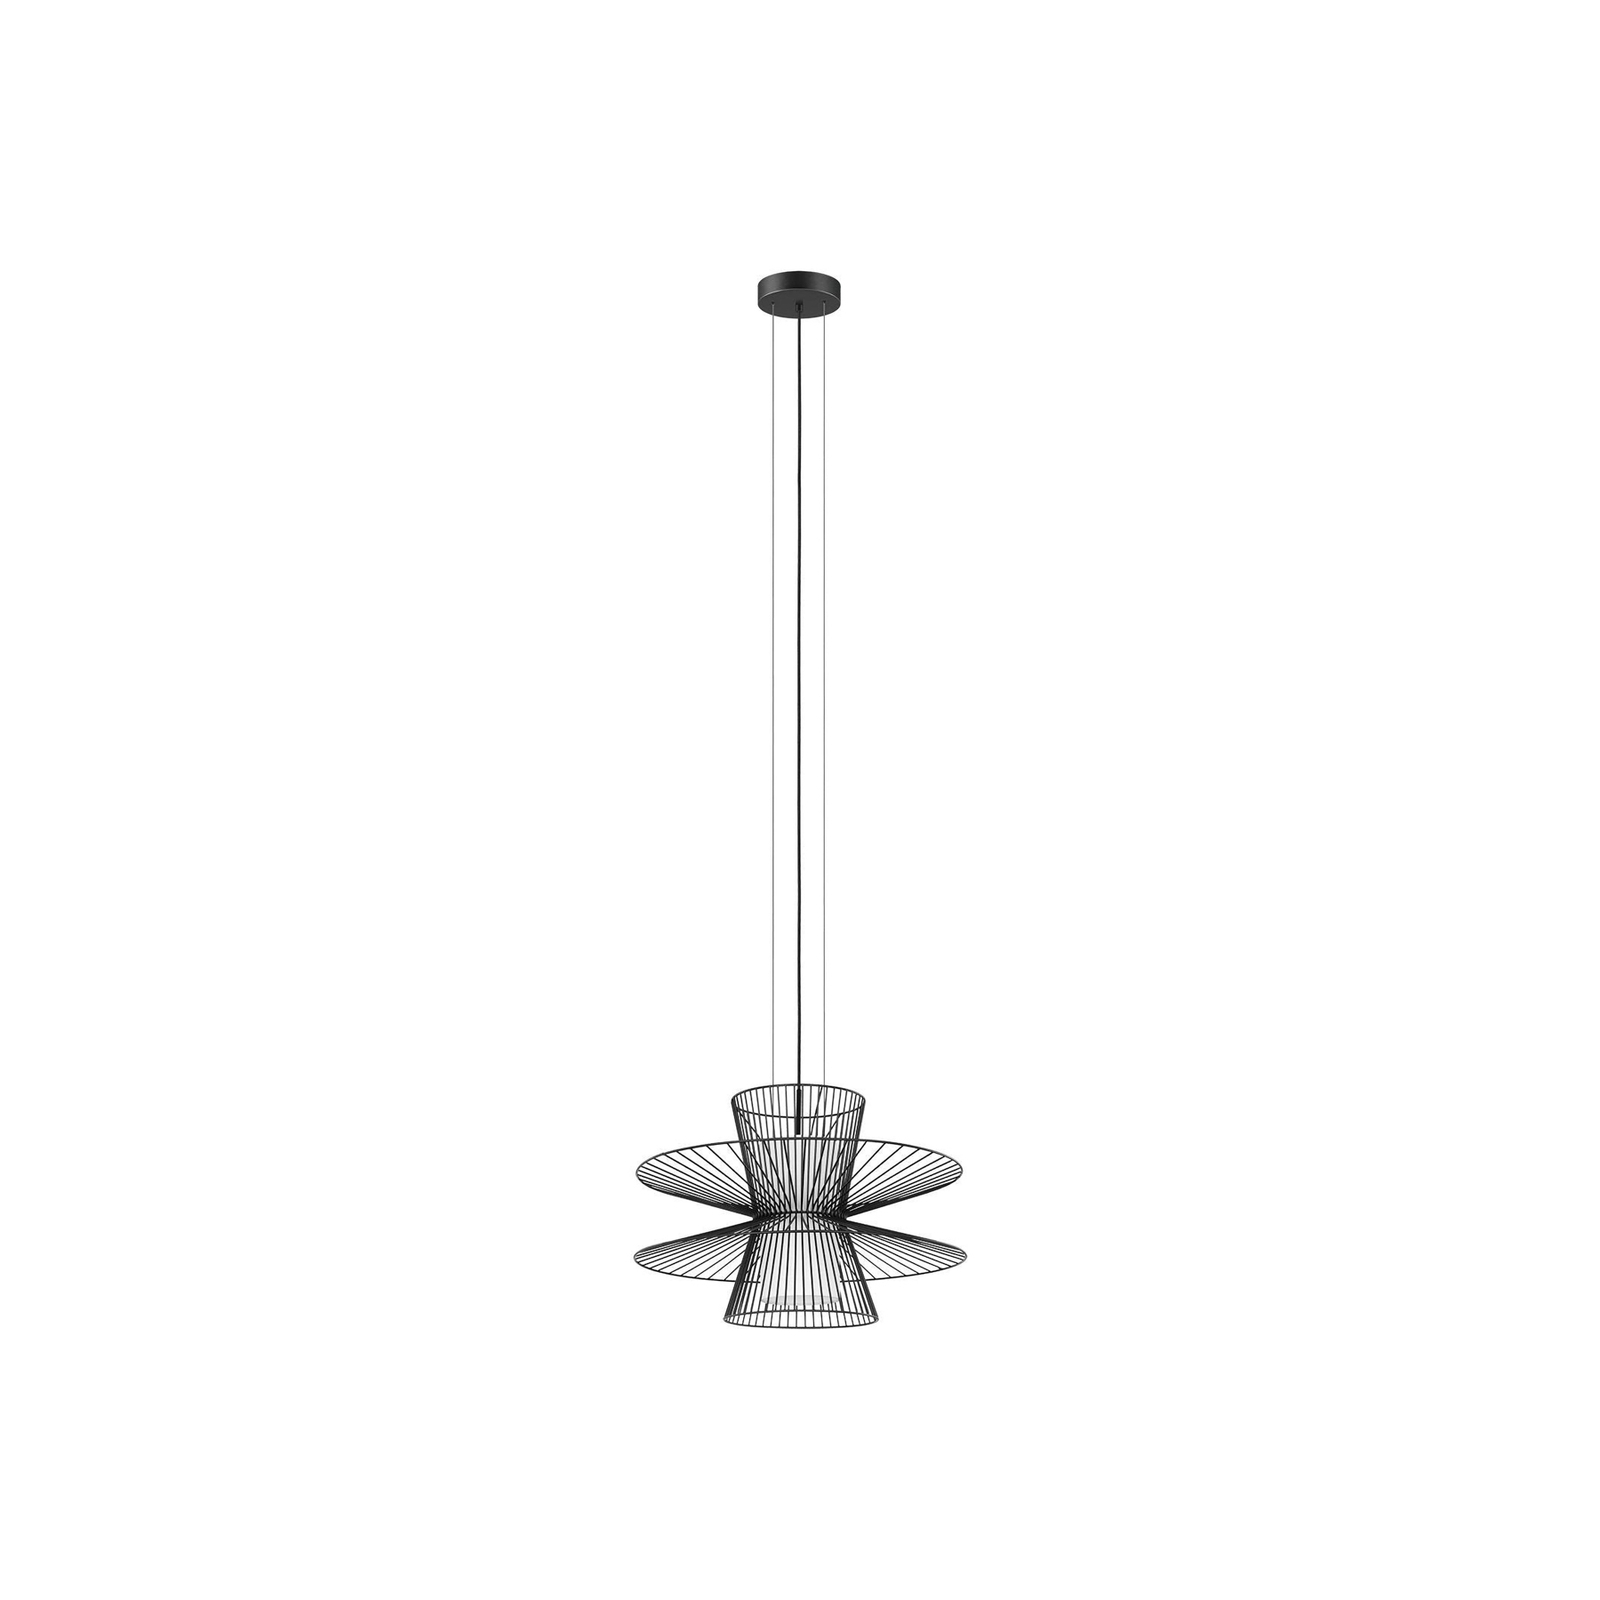 Hanglamp Dulverton met kooikap Ø 58 cm